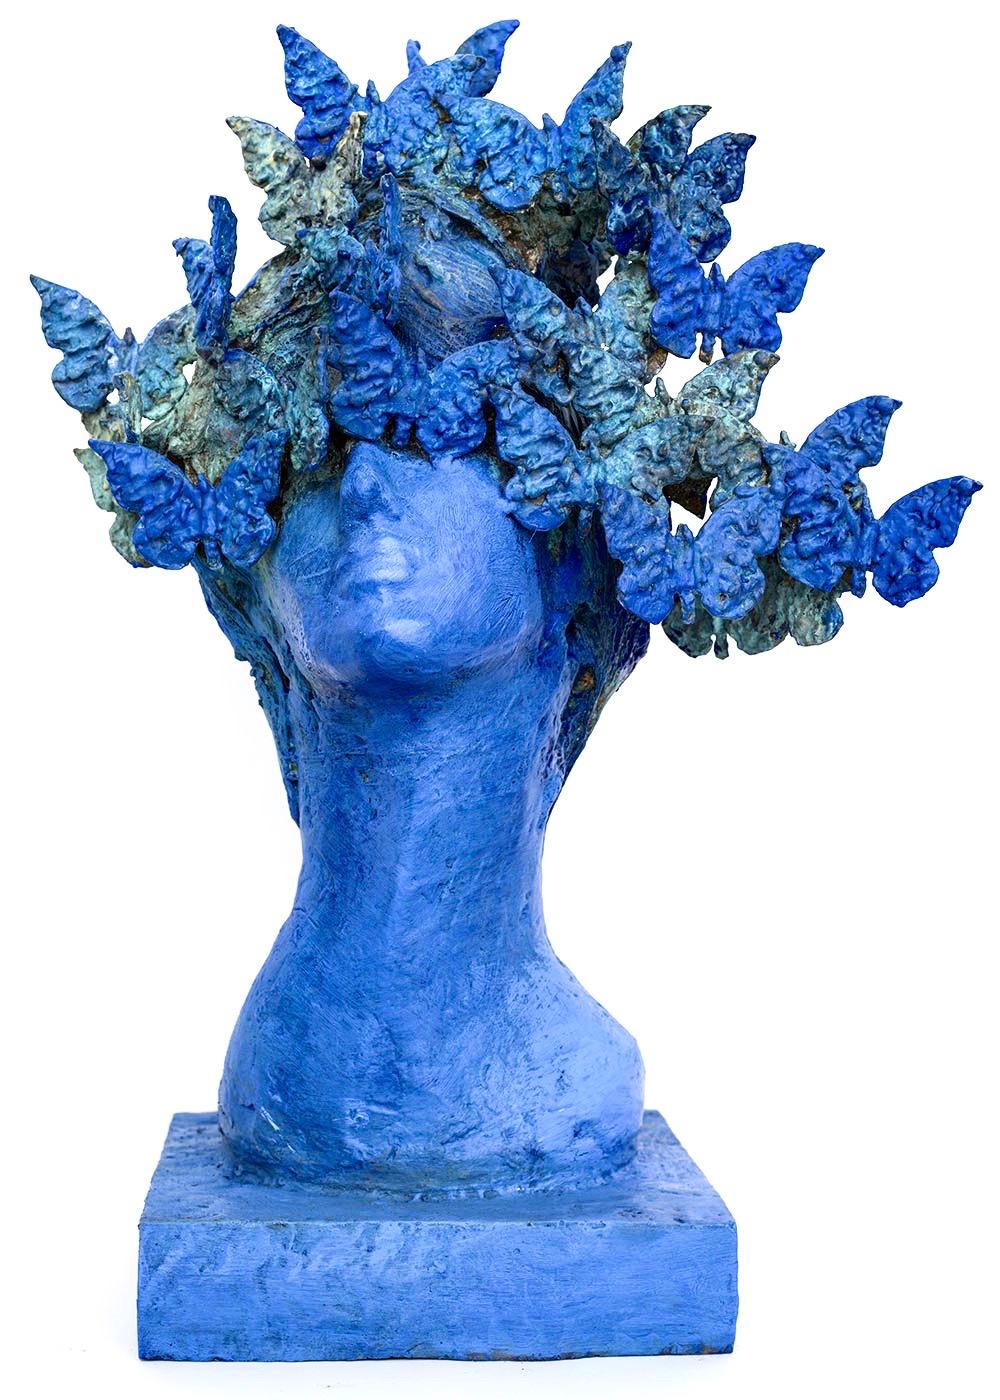 Belle et élégante sculpture en bronze peint en bleu « Clio, Musa della Storia » - Sculpture de Antonio Nocera